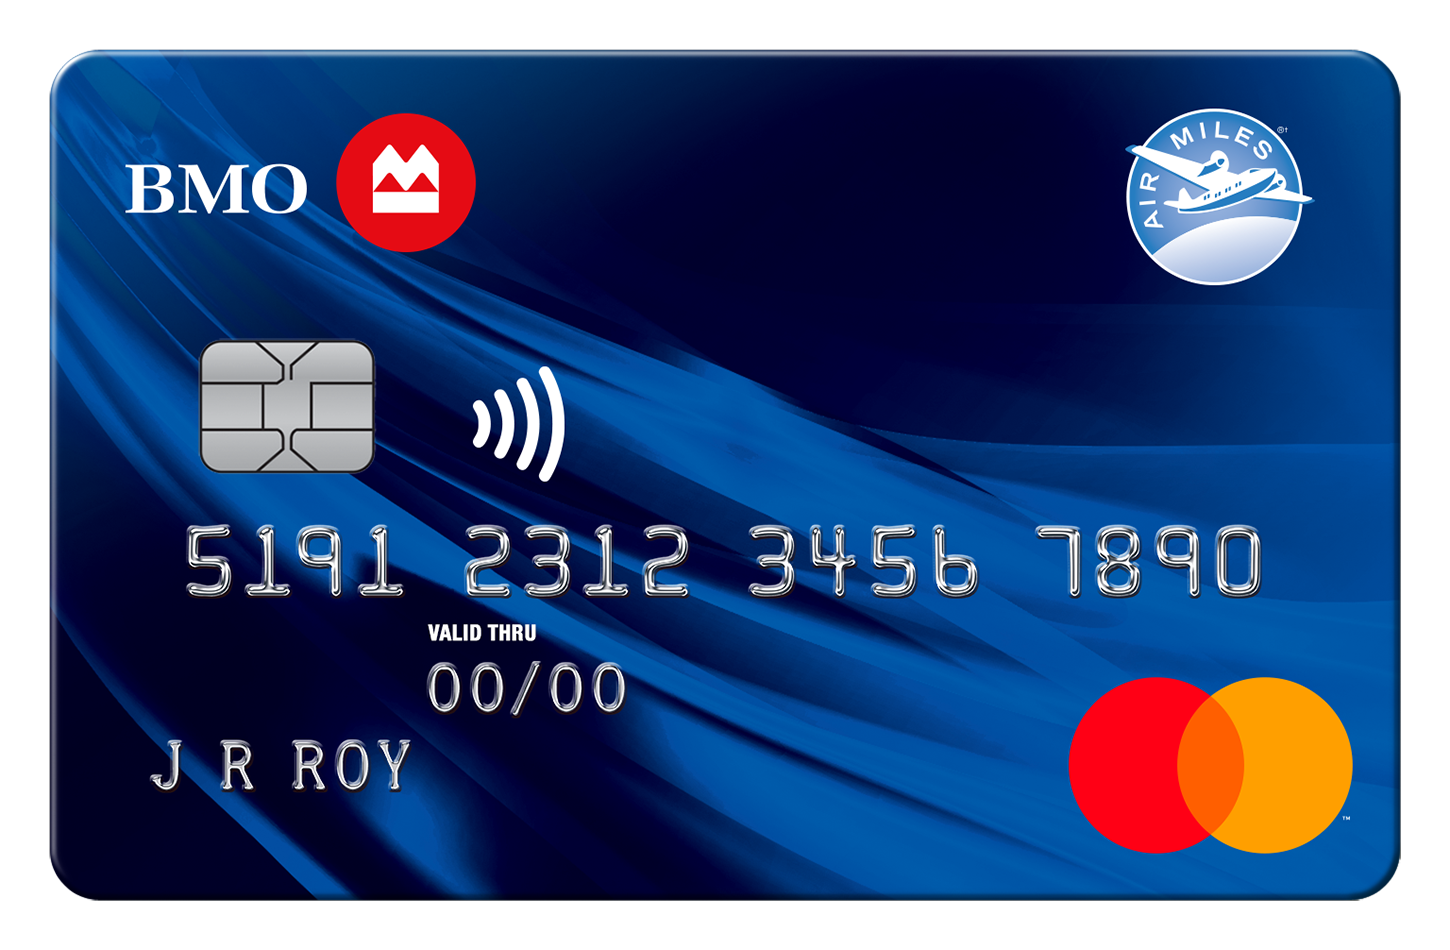 costco credit card benefits travel insurance